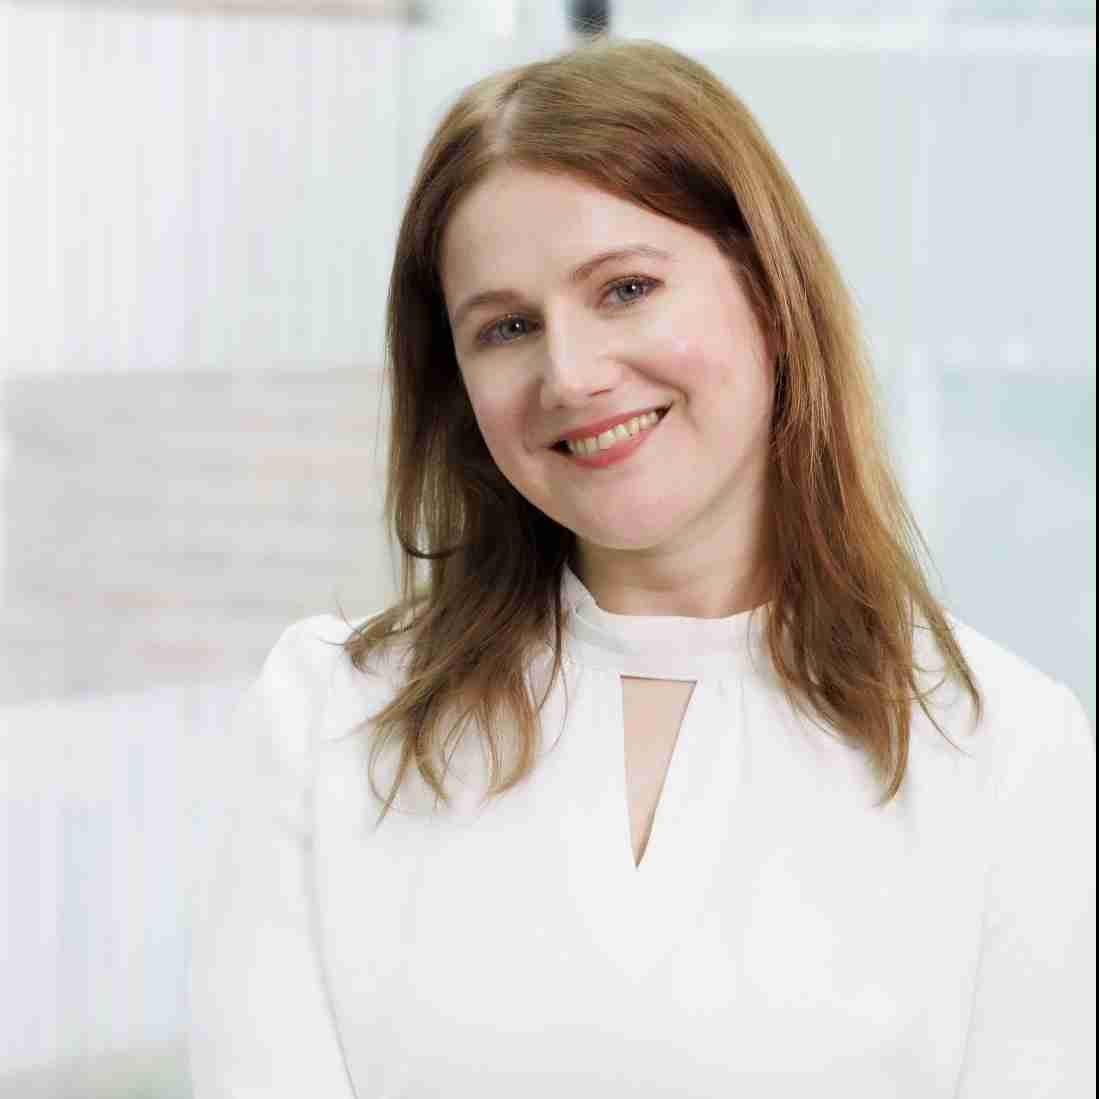 Profile image of Dr Myriam Dell'Olio